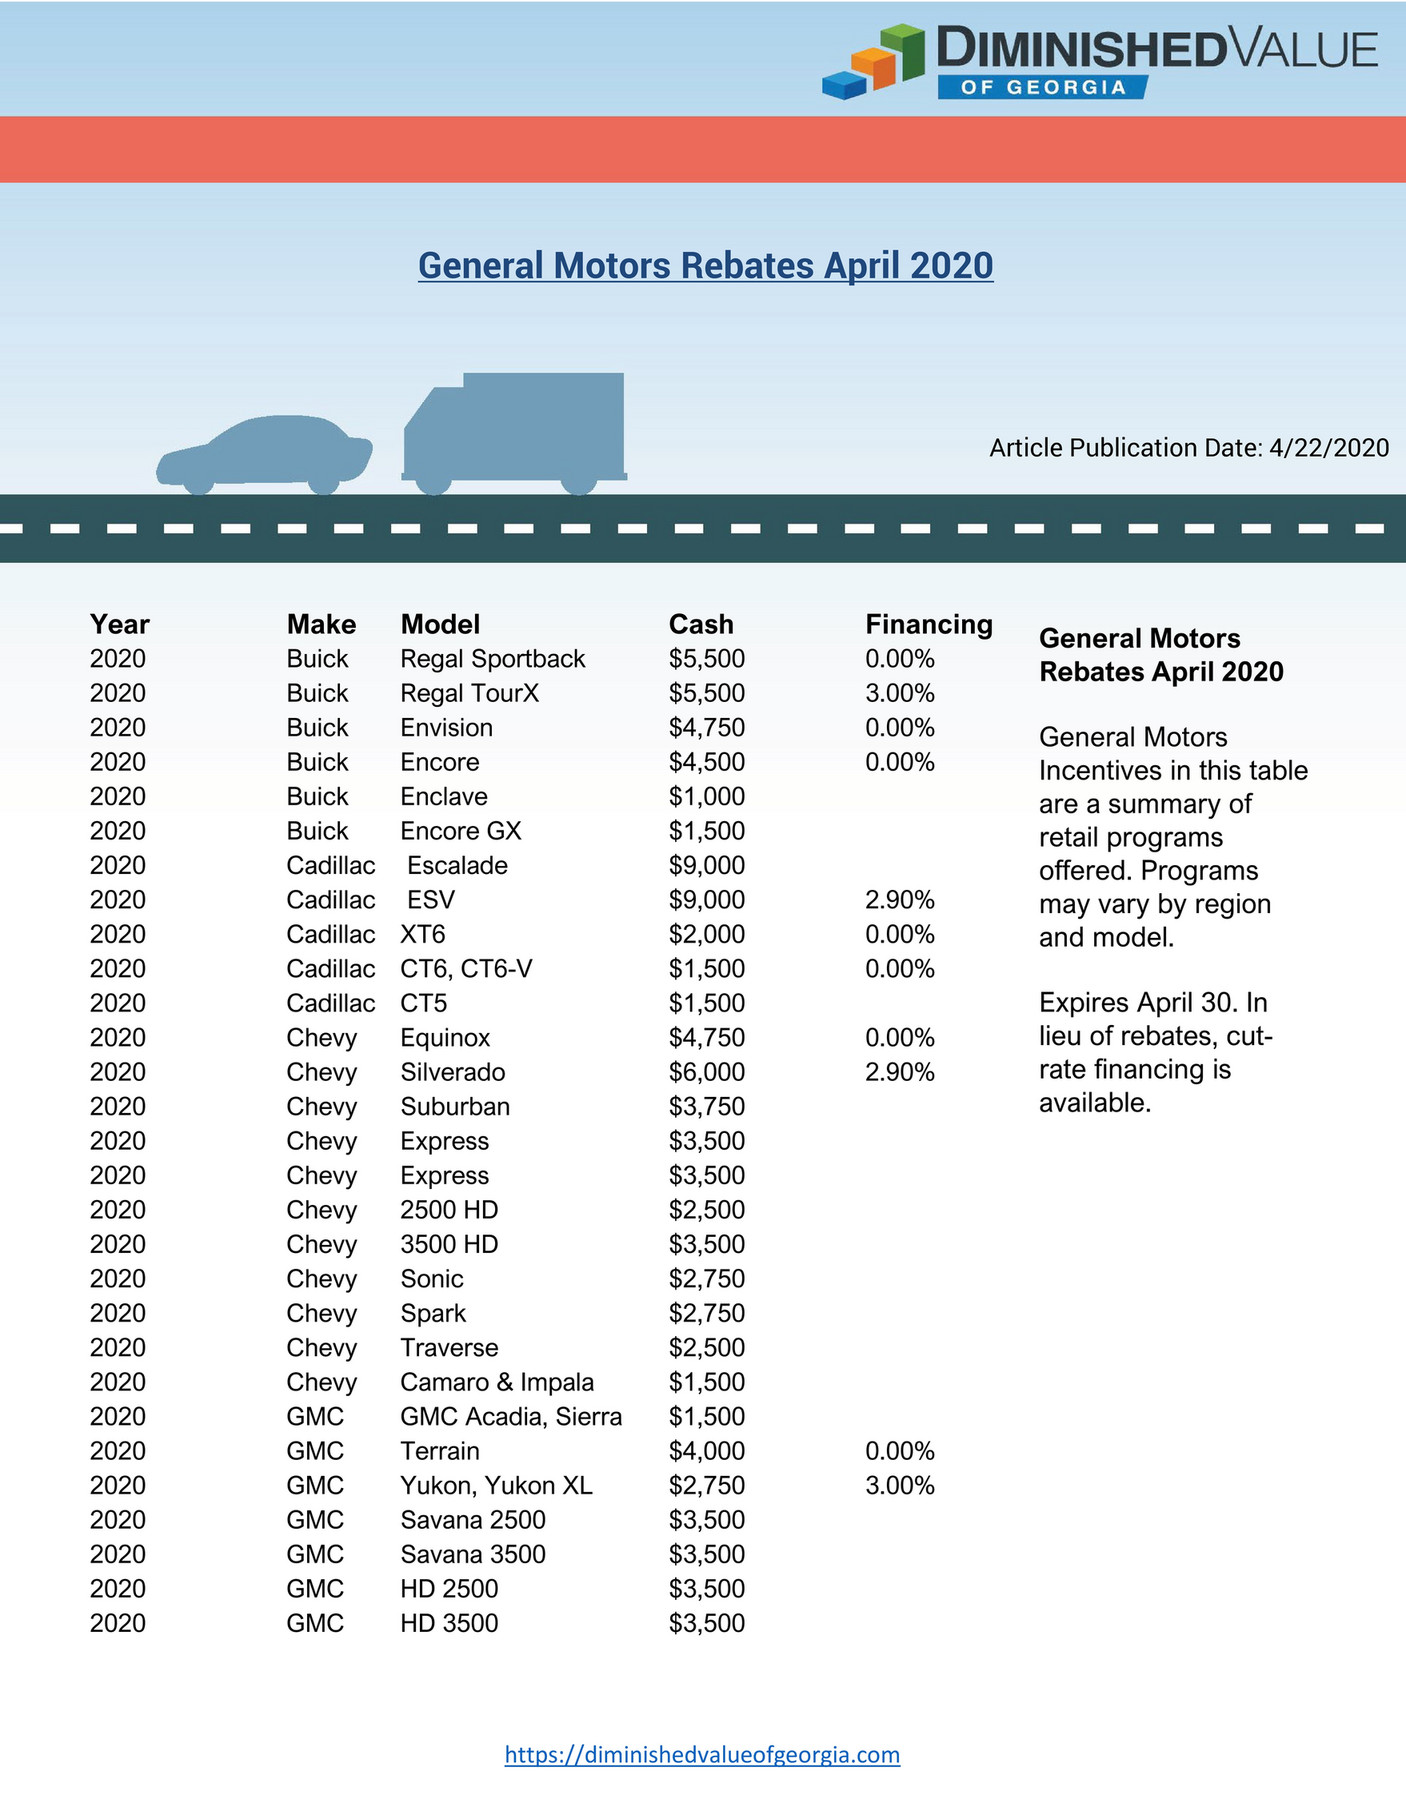 appraisal-engine-inc-general-motors-rebates-april-2020-page-1-created-with-publitas